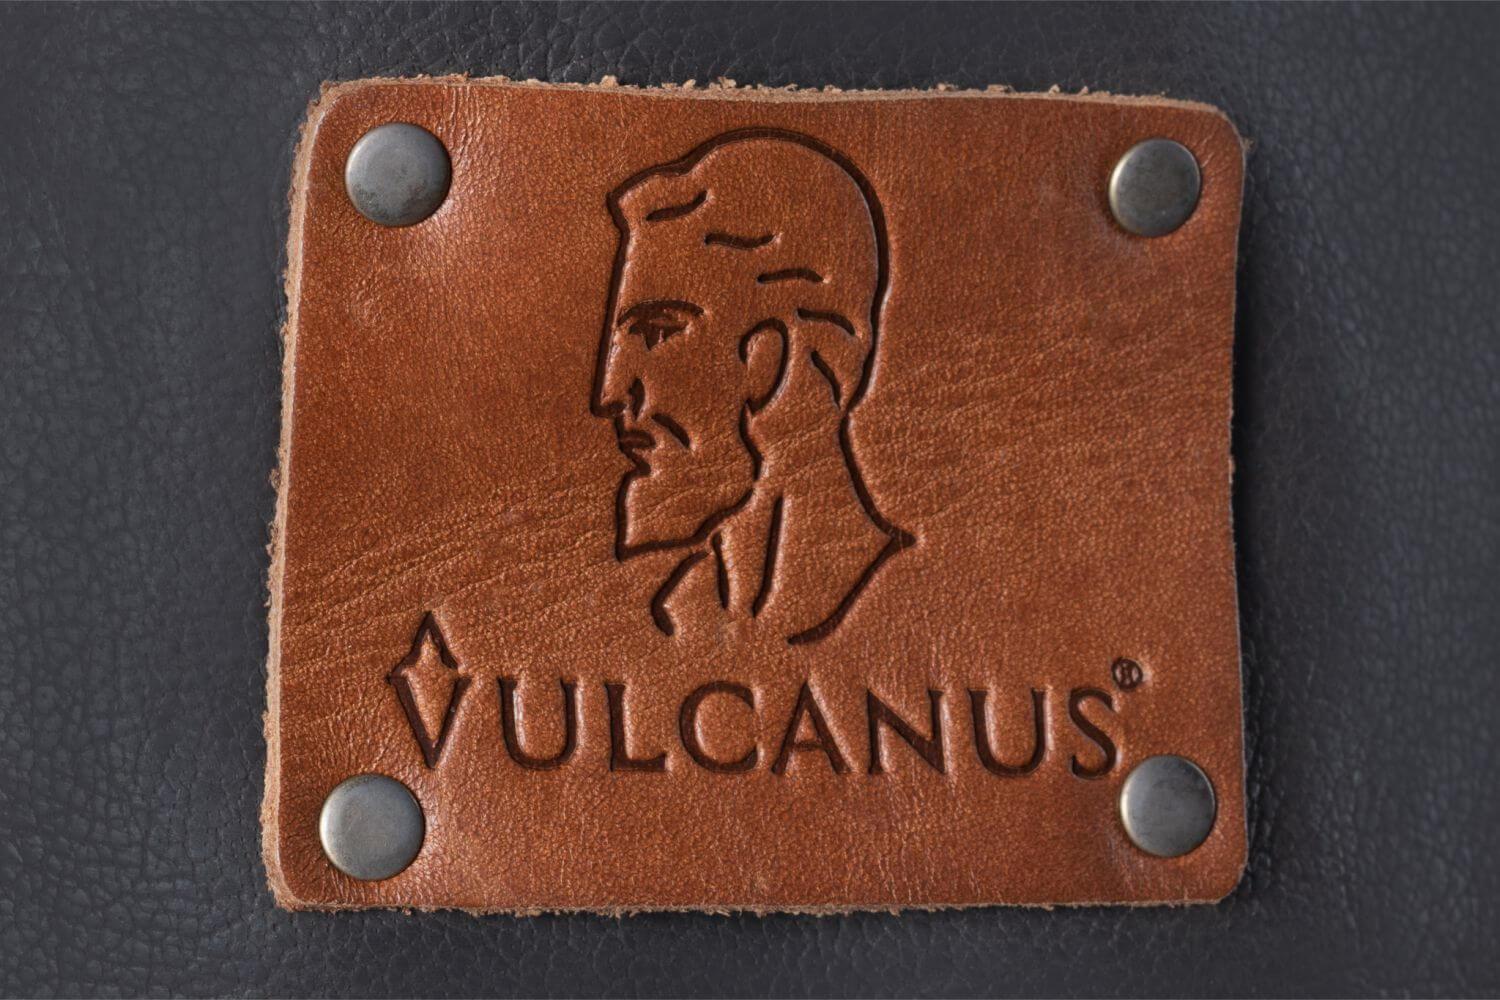 Vulcanus 900120 leather apron npl pic02